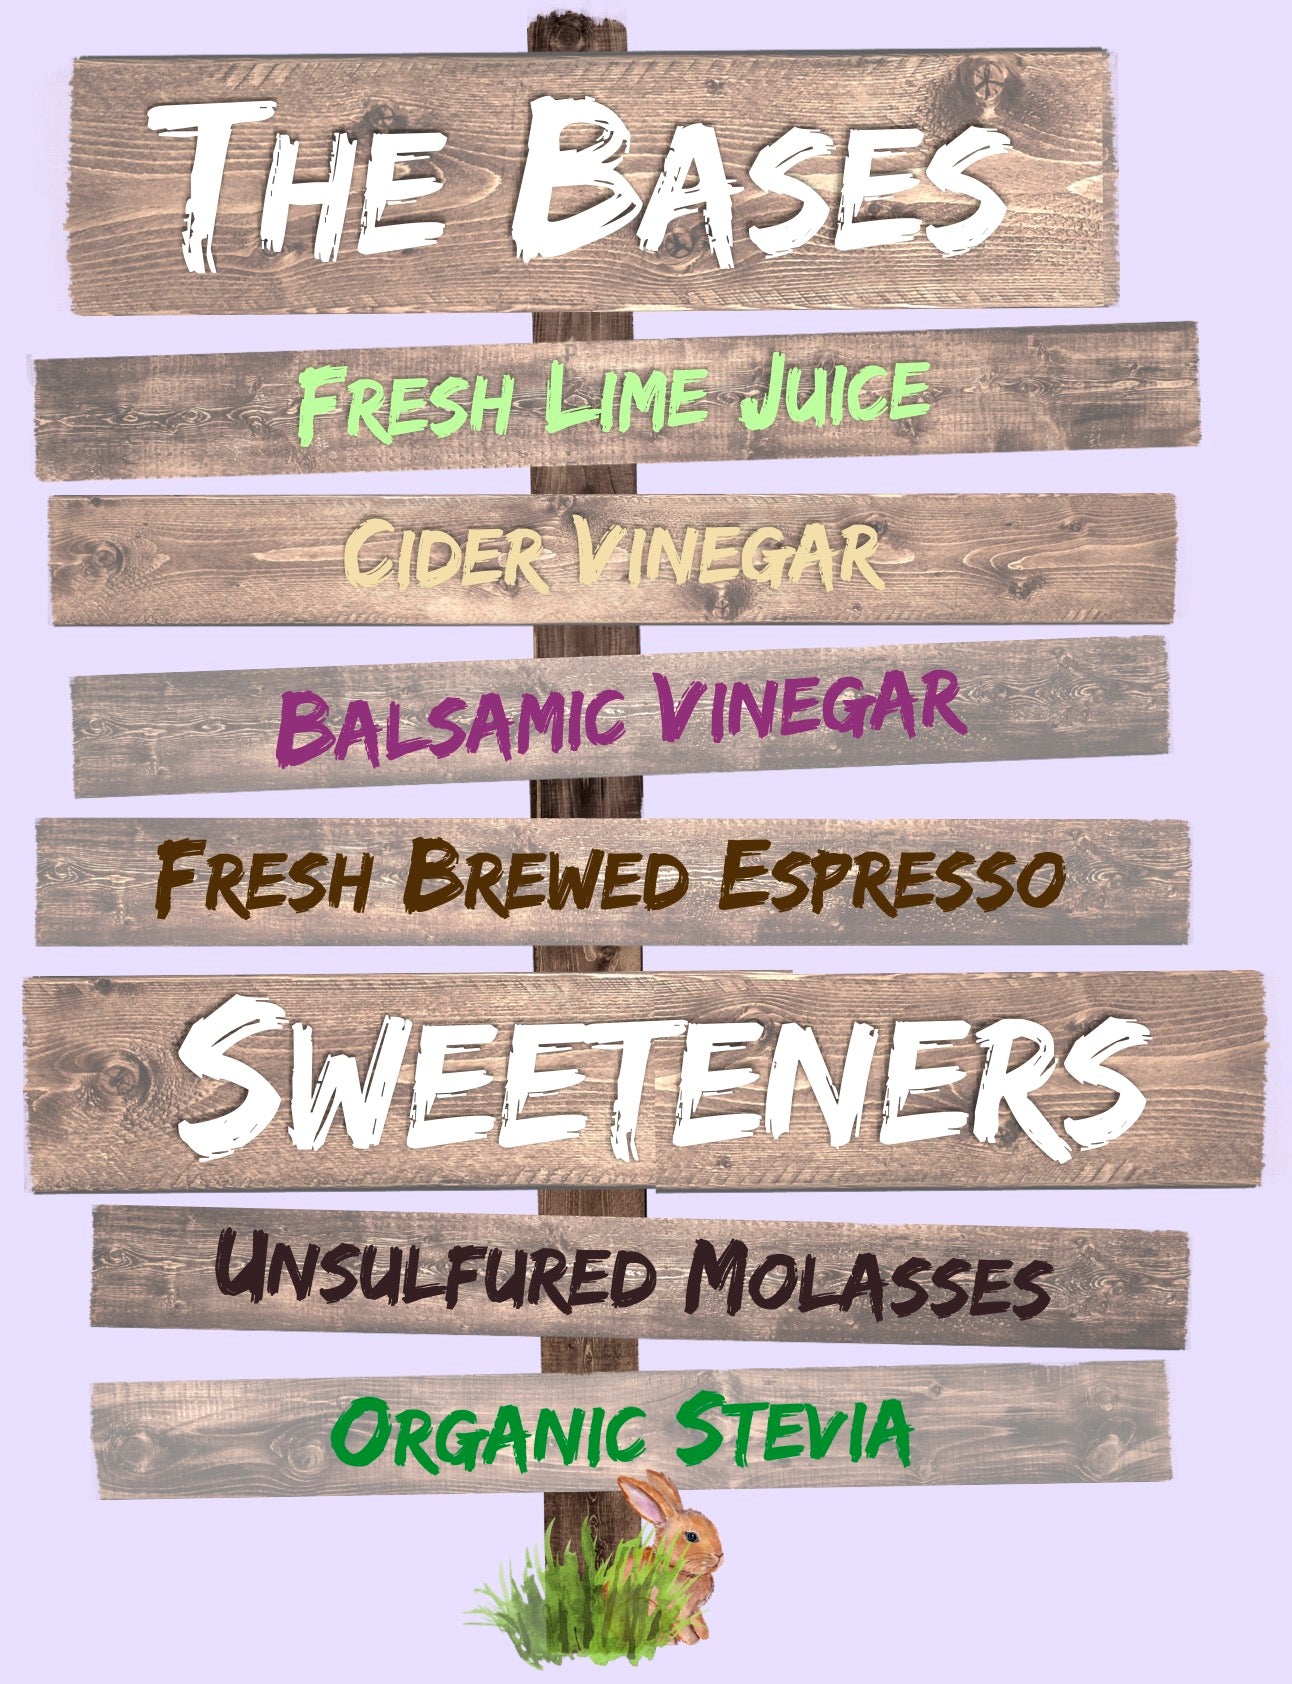 Signs Listing Papa's ingredients: The Bases: fresh lime juice, cider vinegar, fresh brewed espresso, & balsamic vinegar. And Sweeteners; unsulfured molasses & Organic Stevia.